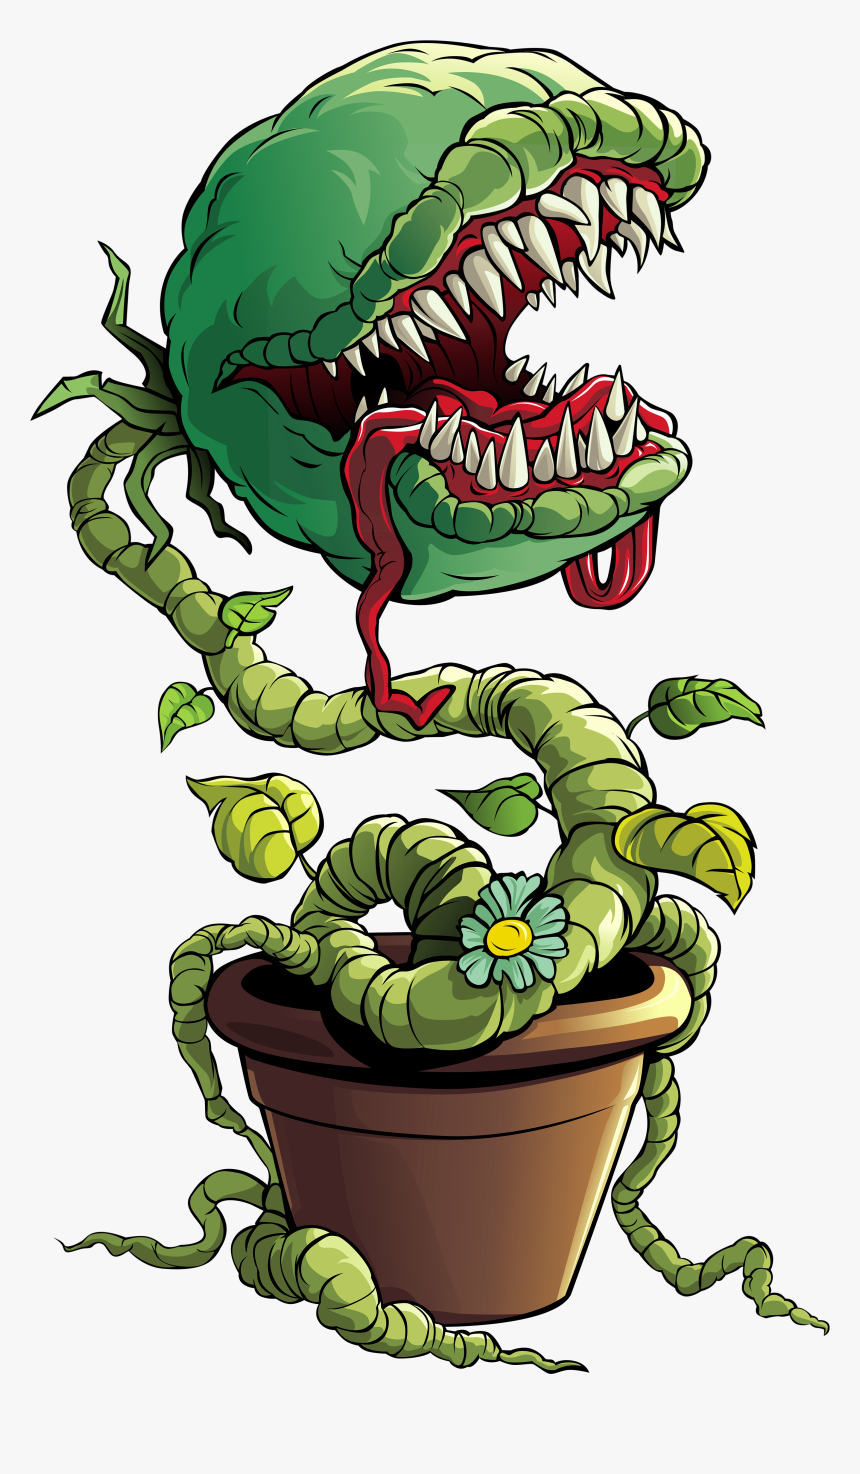 116-1160135_venus-fly-trap-plant-monster-png-clip-art